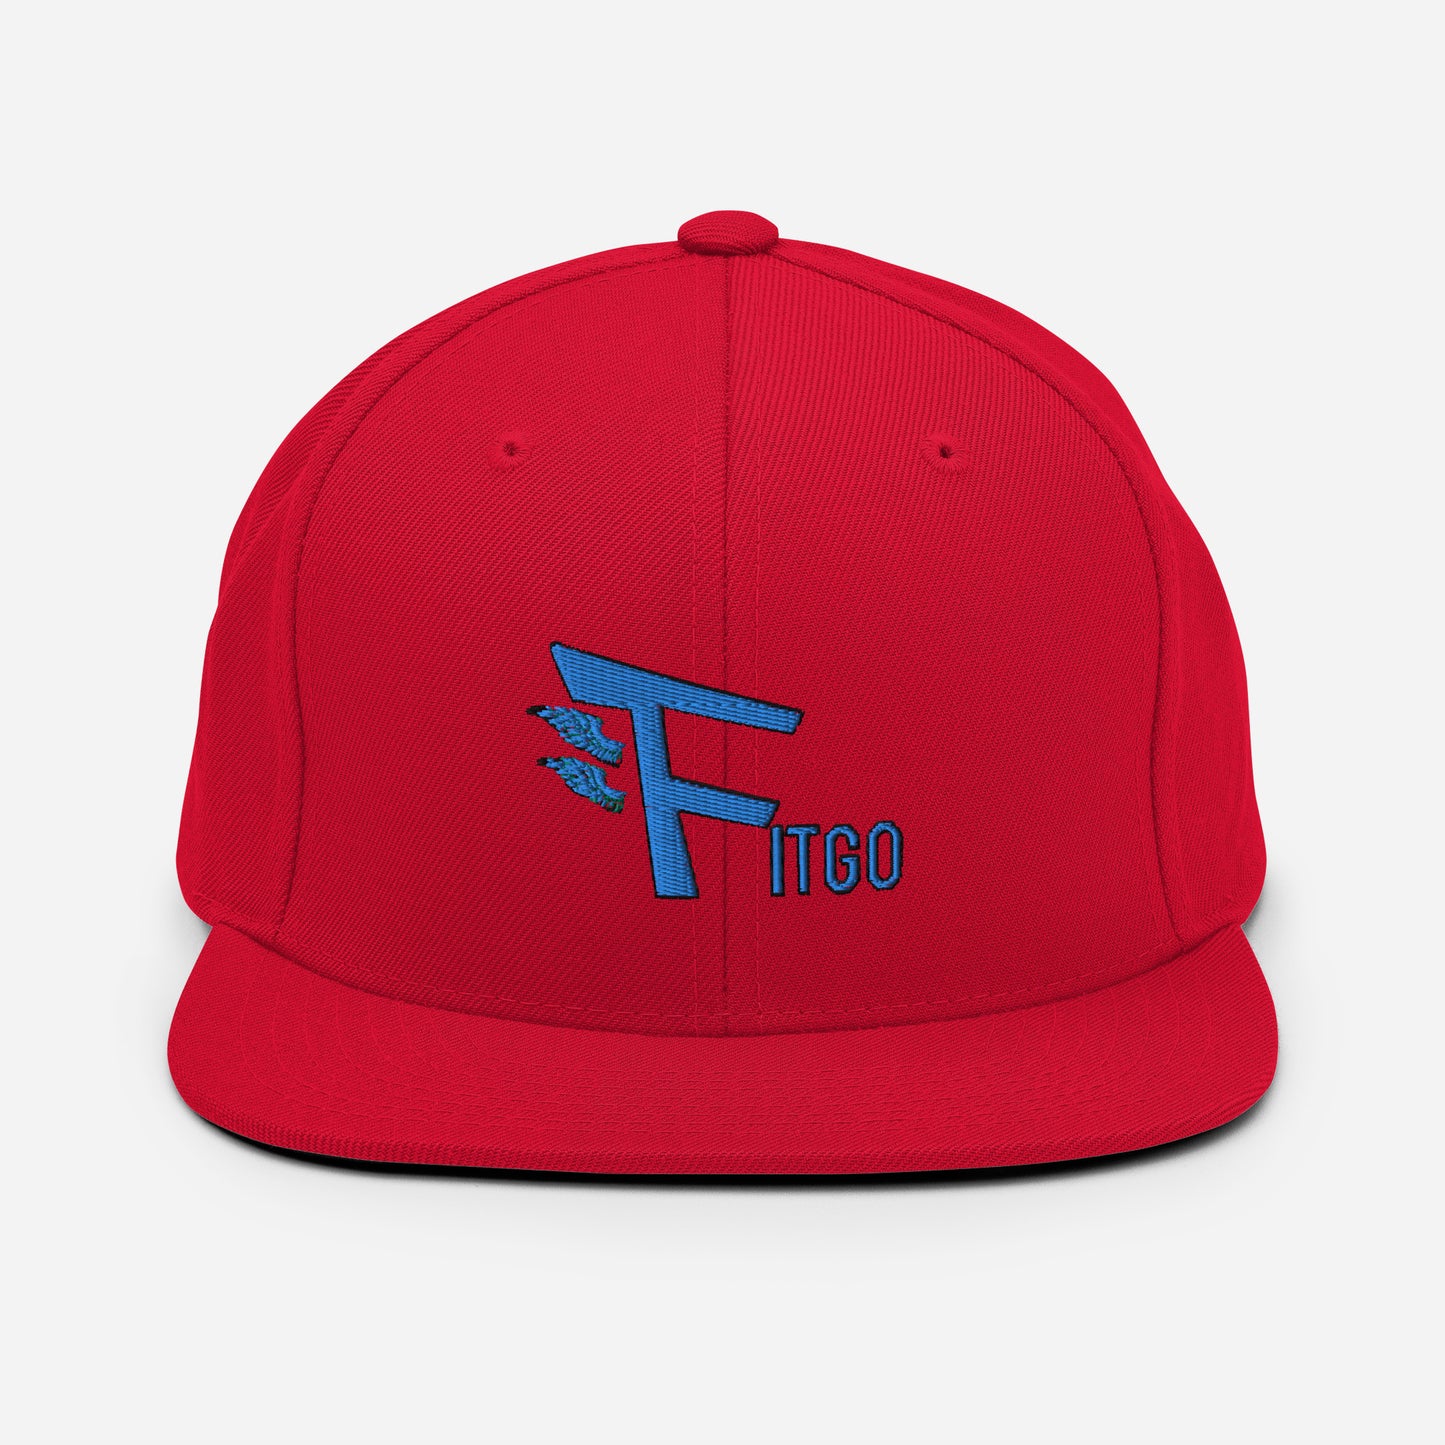 Men's Fitgo Stitched Snapback Hat